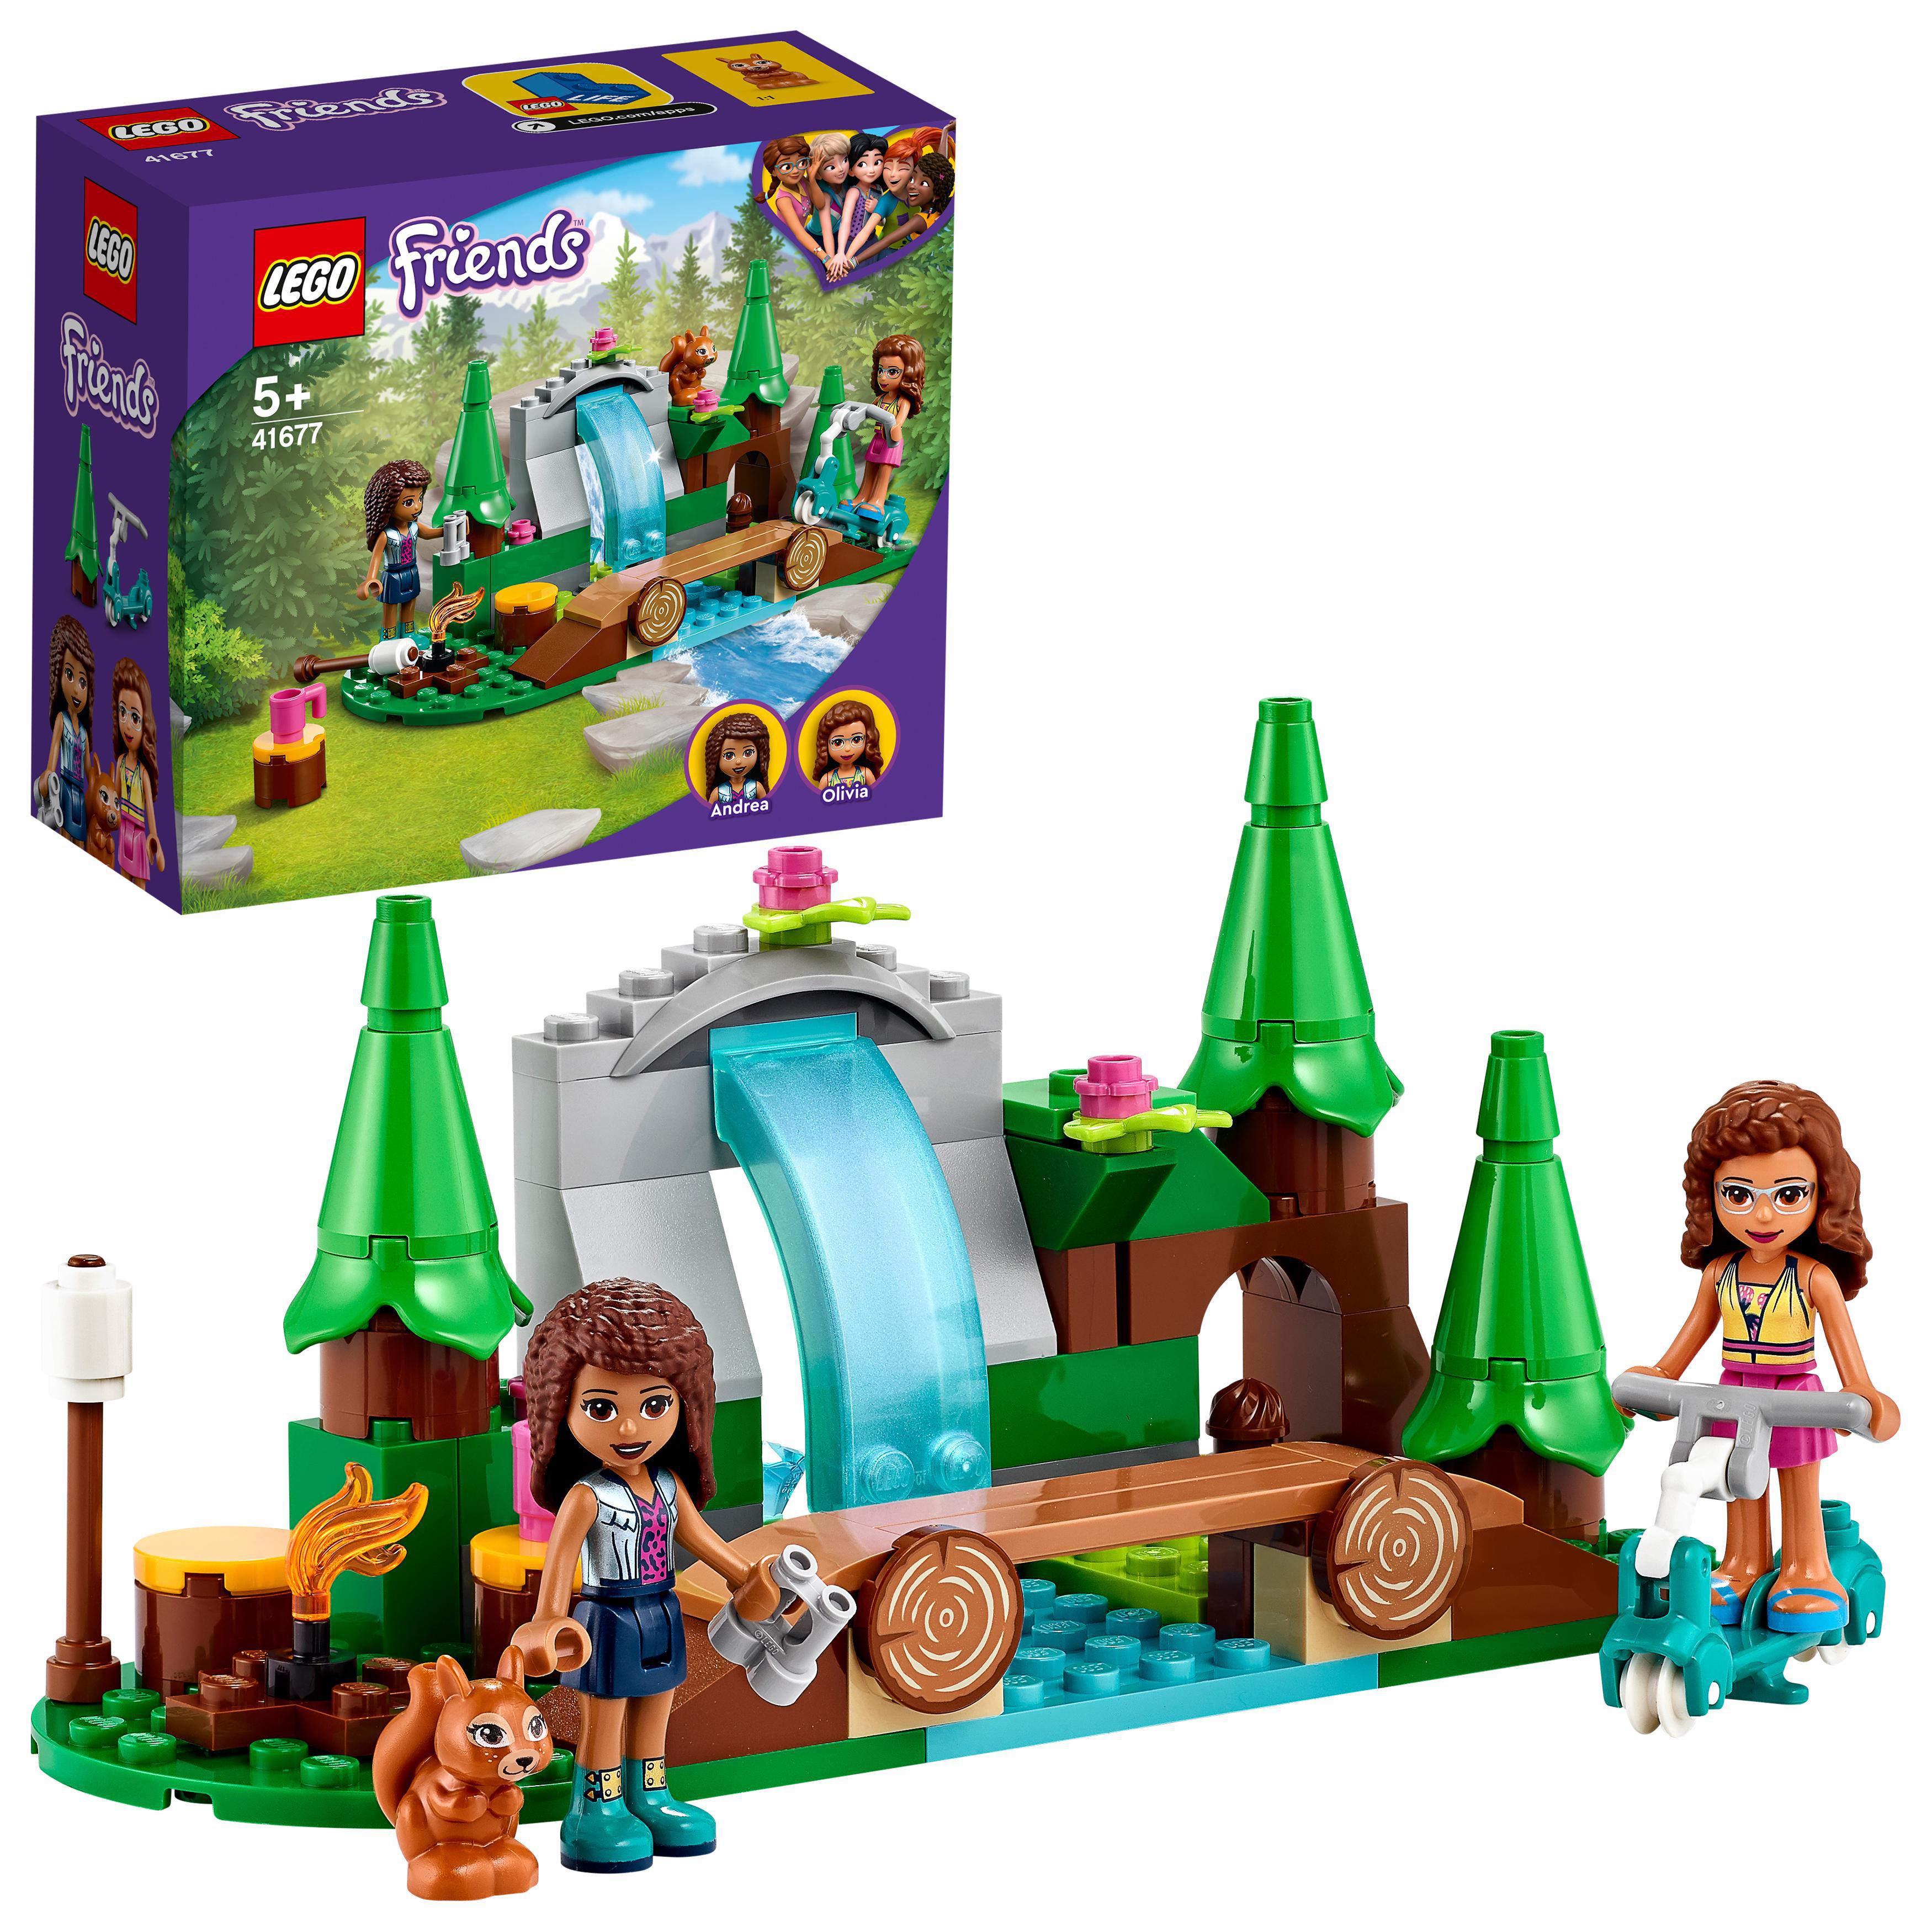 LEGO Friends - Forest Waterfall (41677)